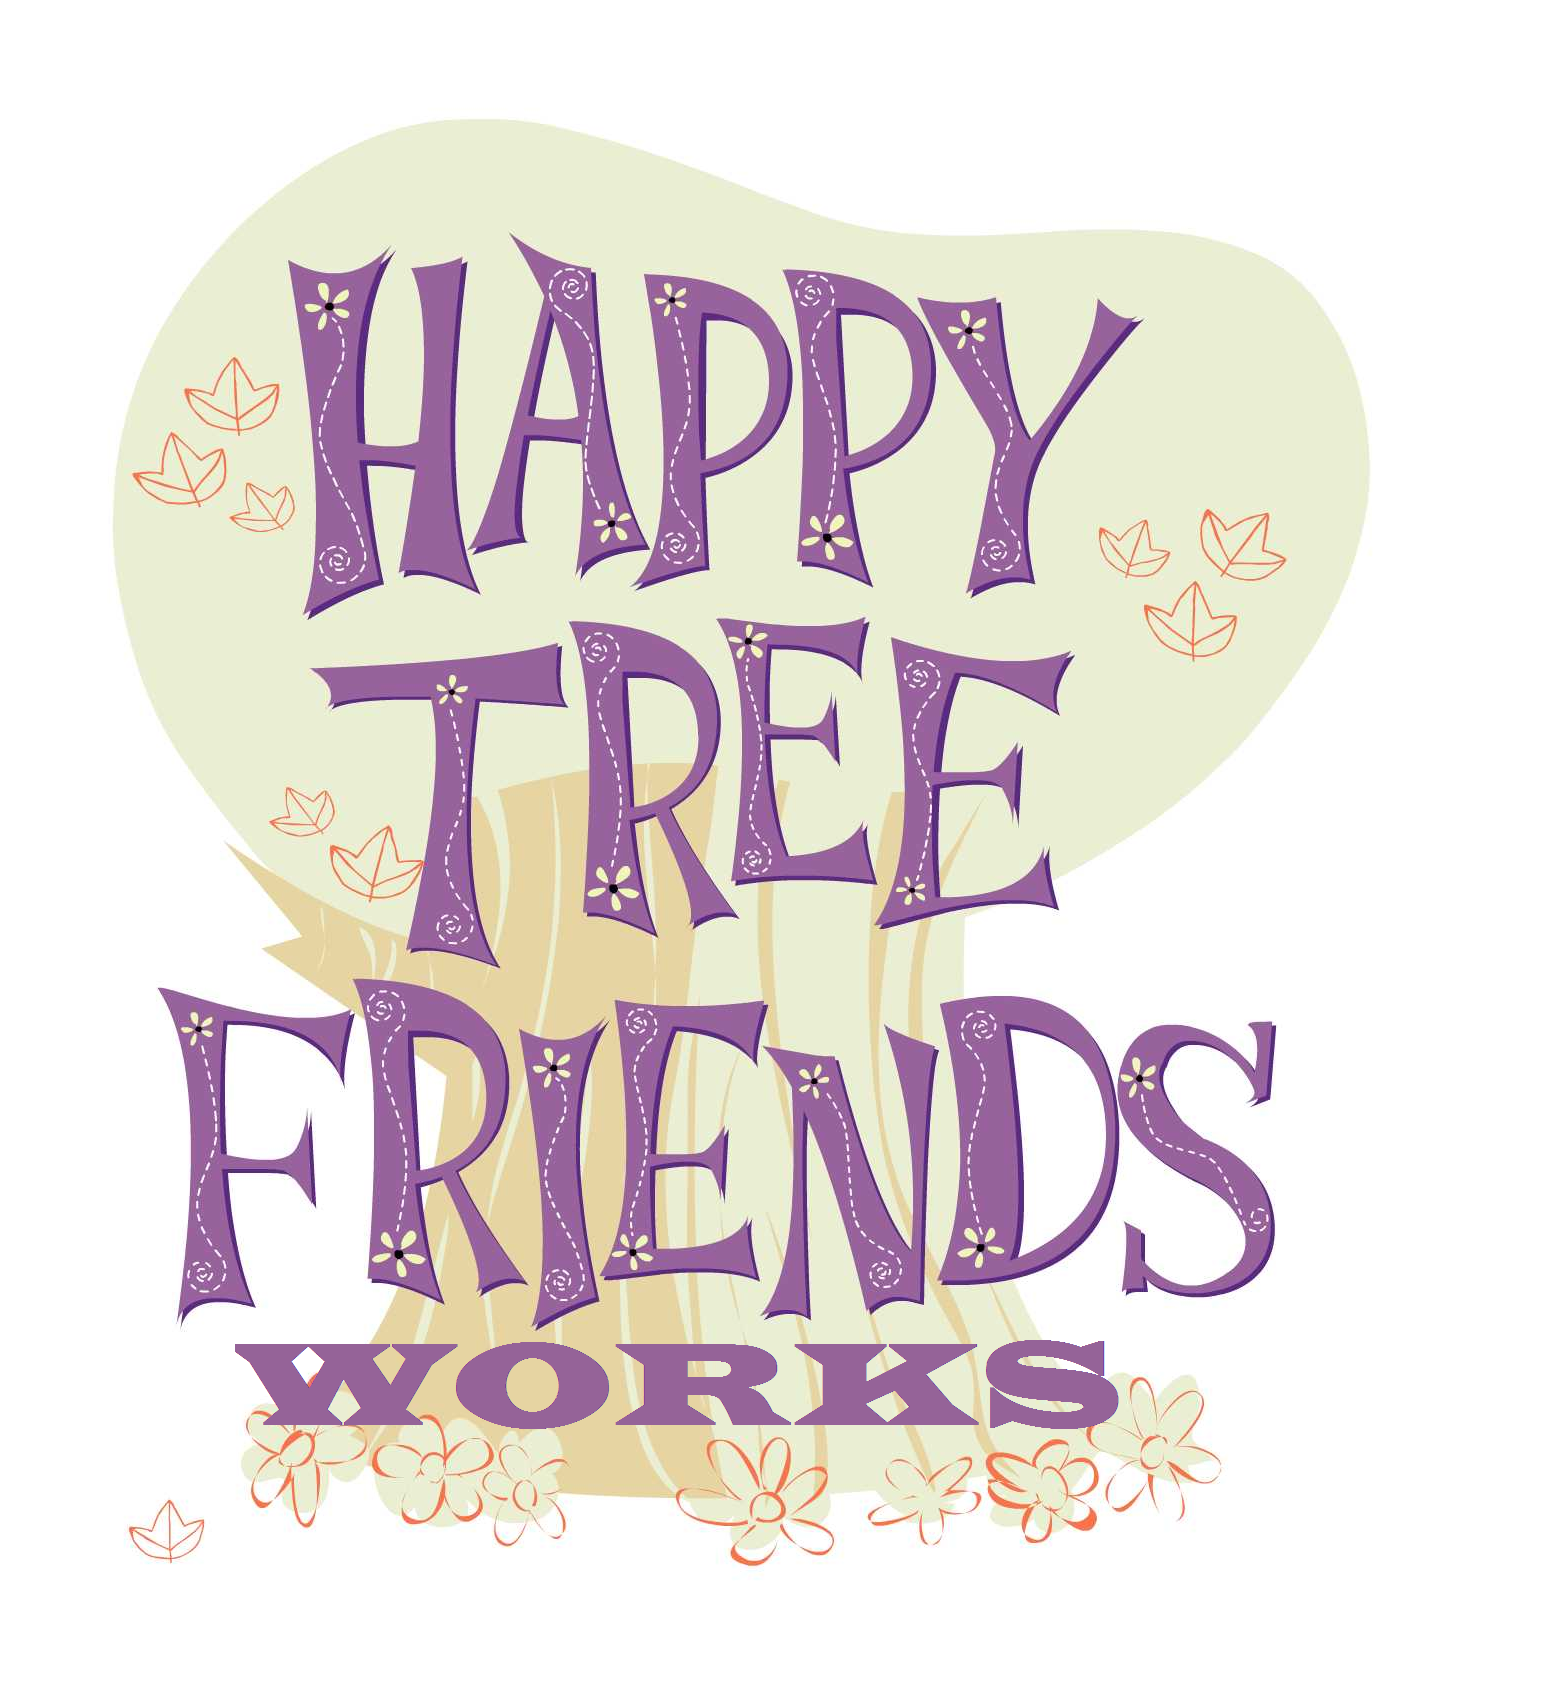 happy tree friends logo